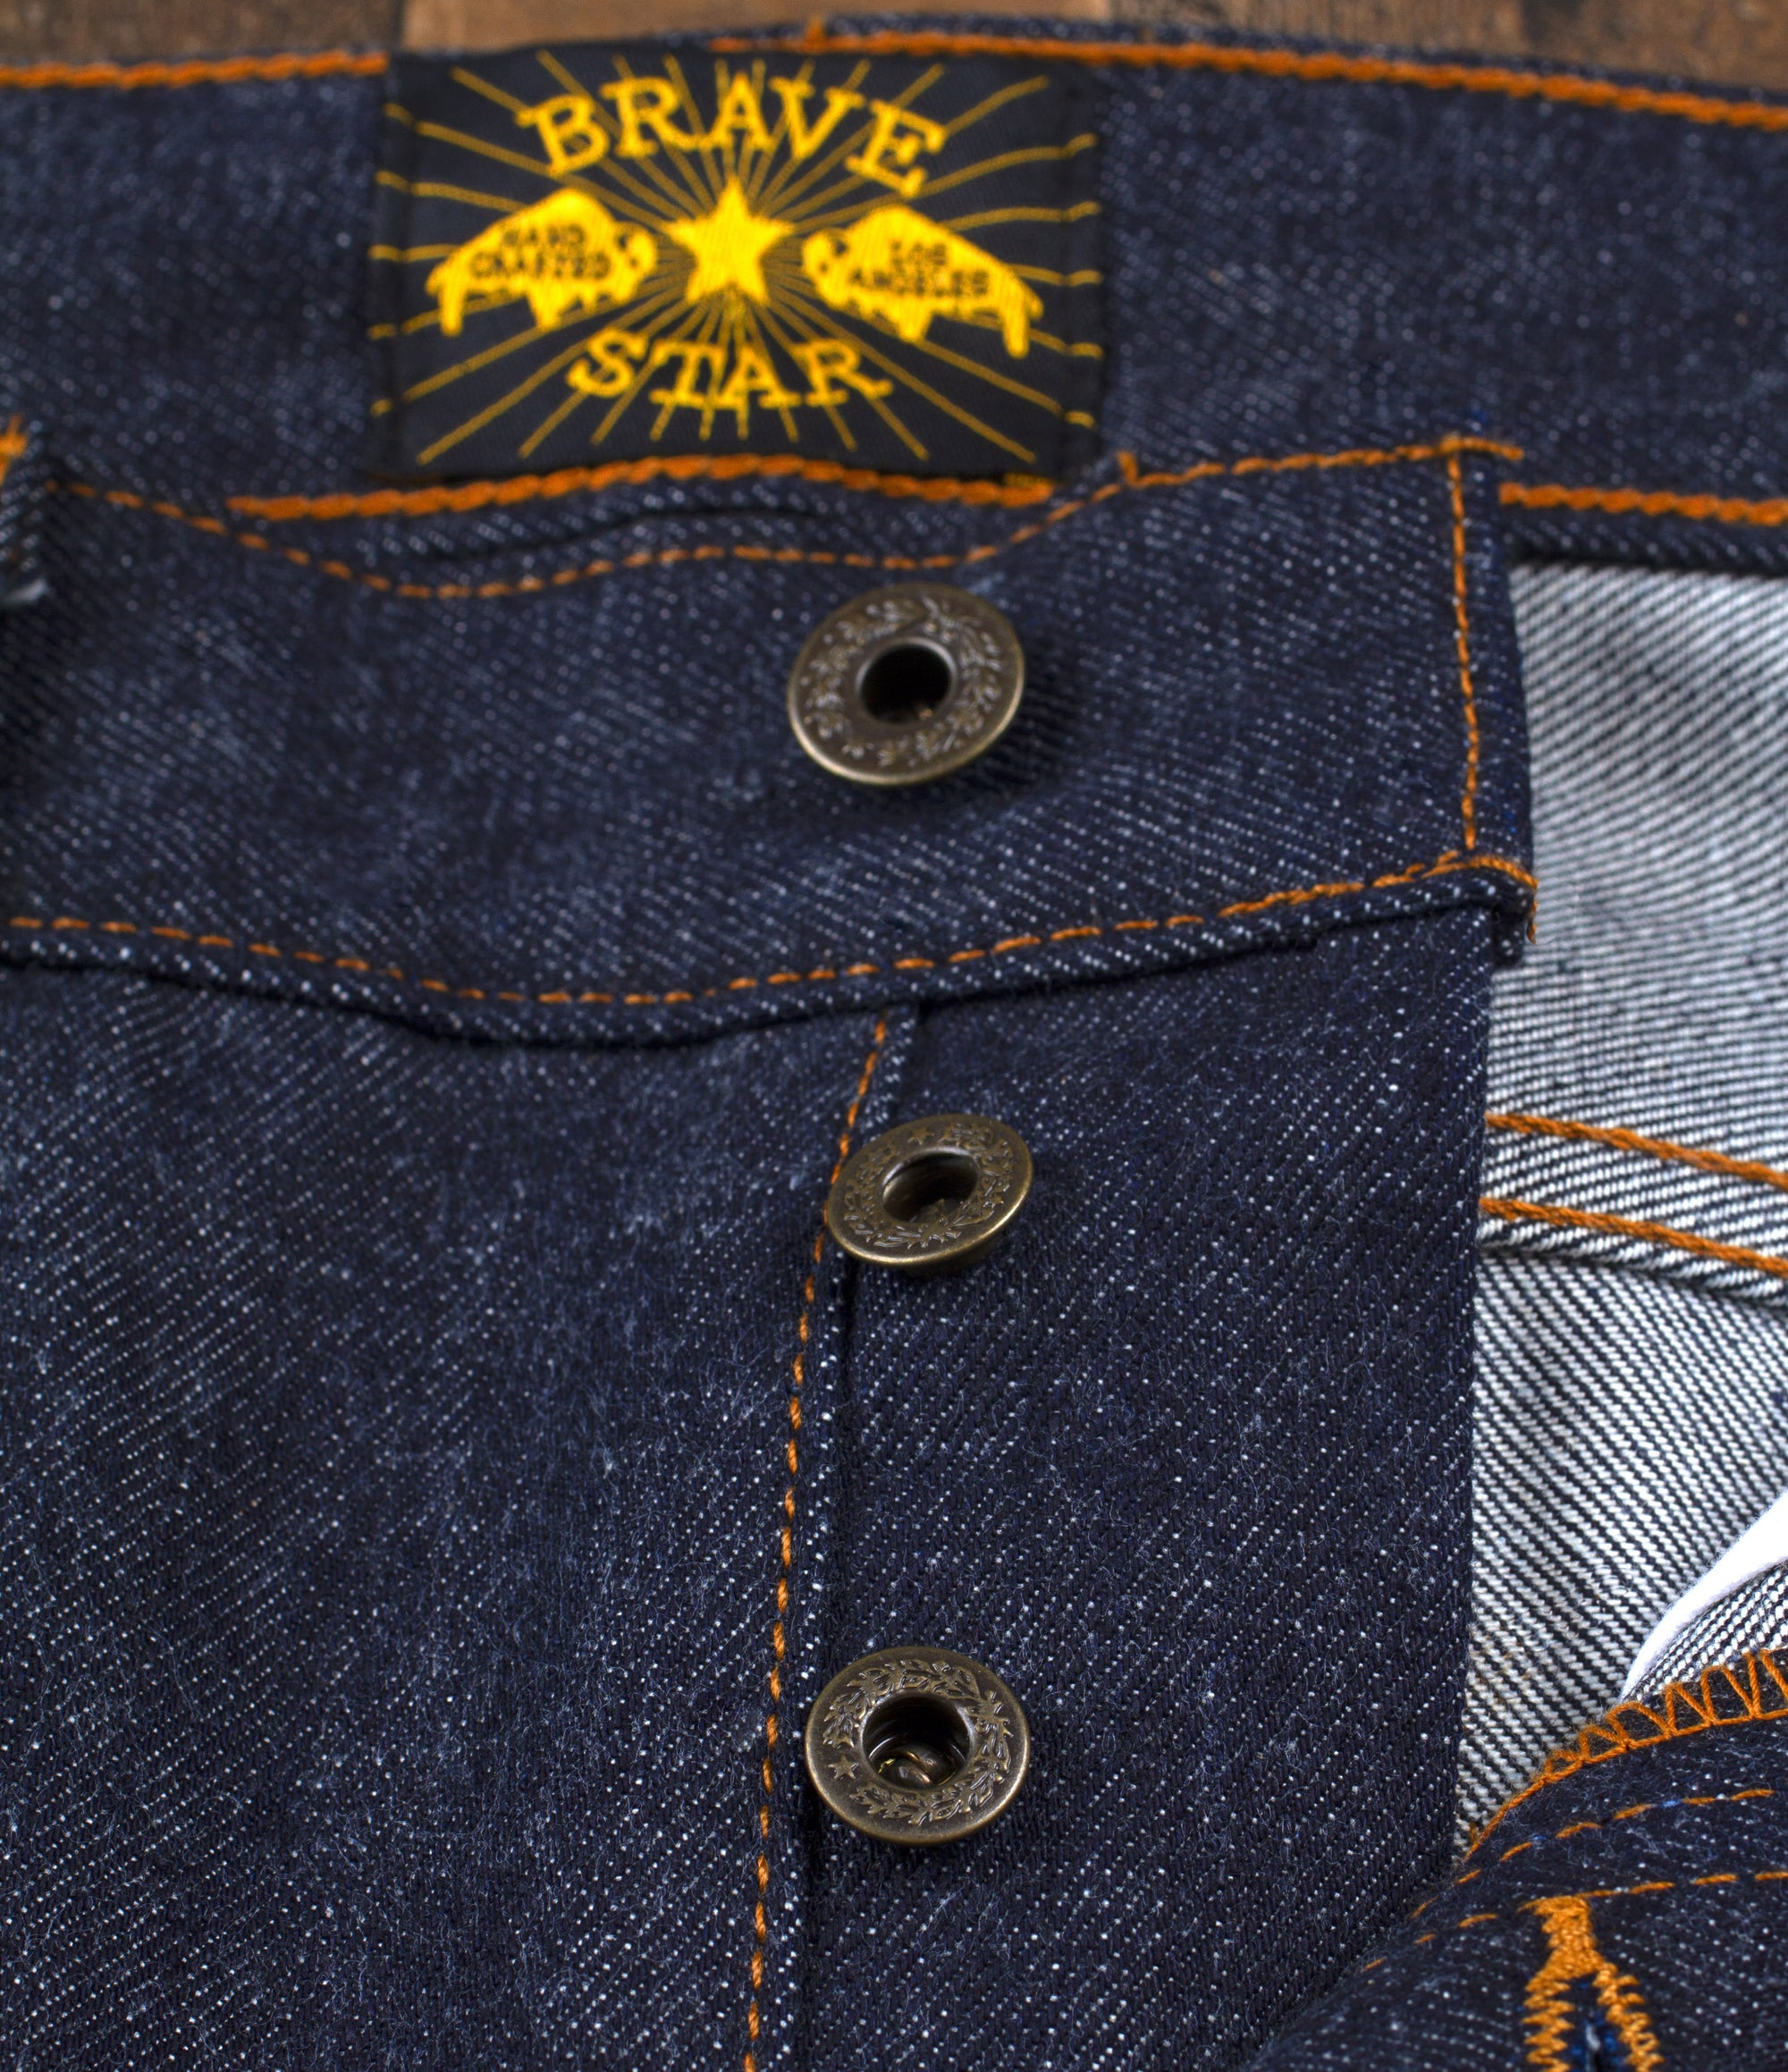 Brave Star Selvedge Cone Mills Raw Selvedge Denim Jeans Size 31